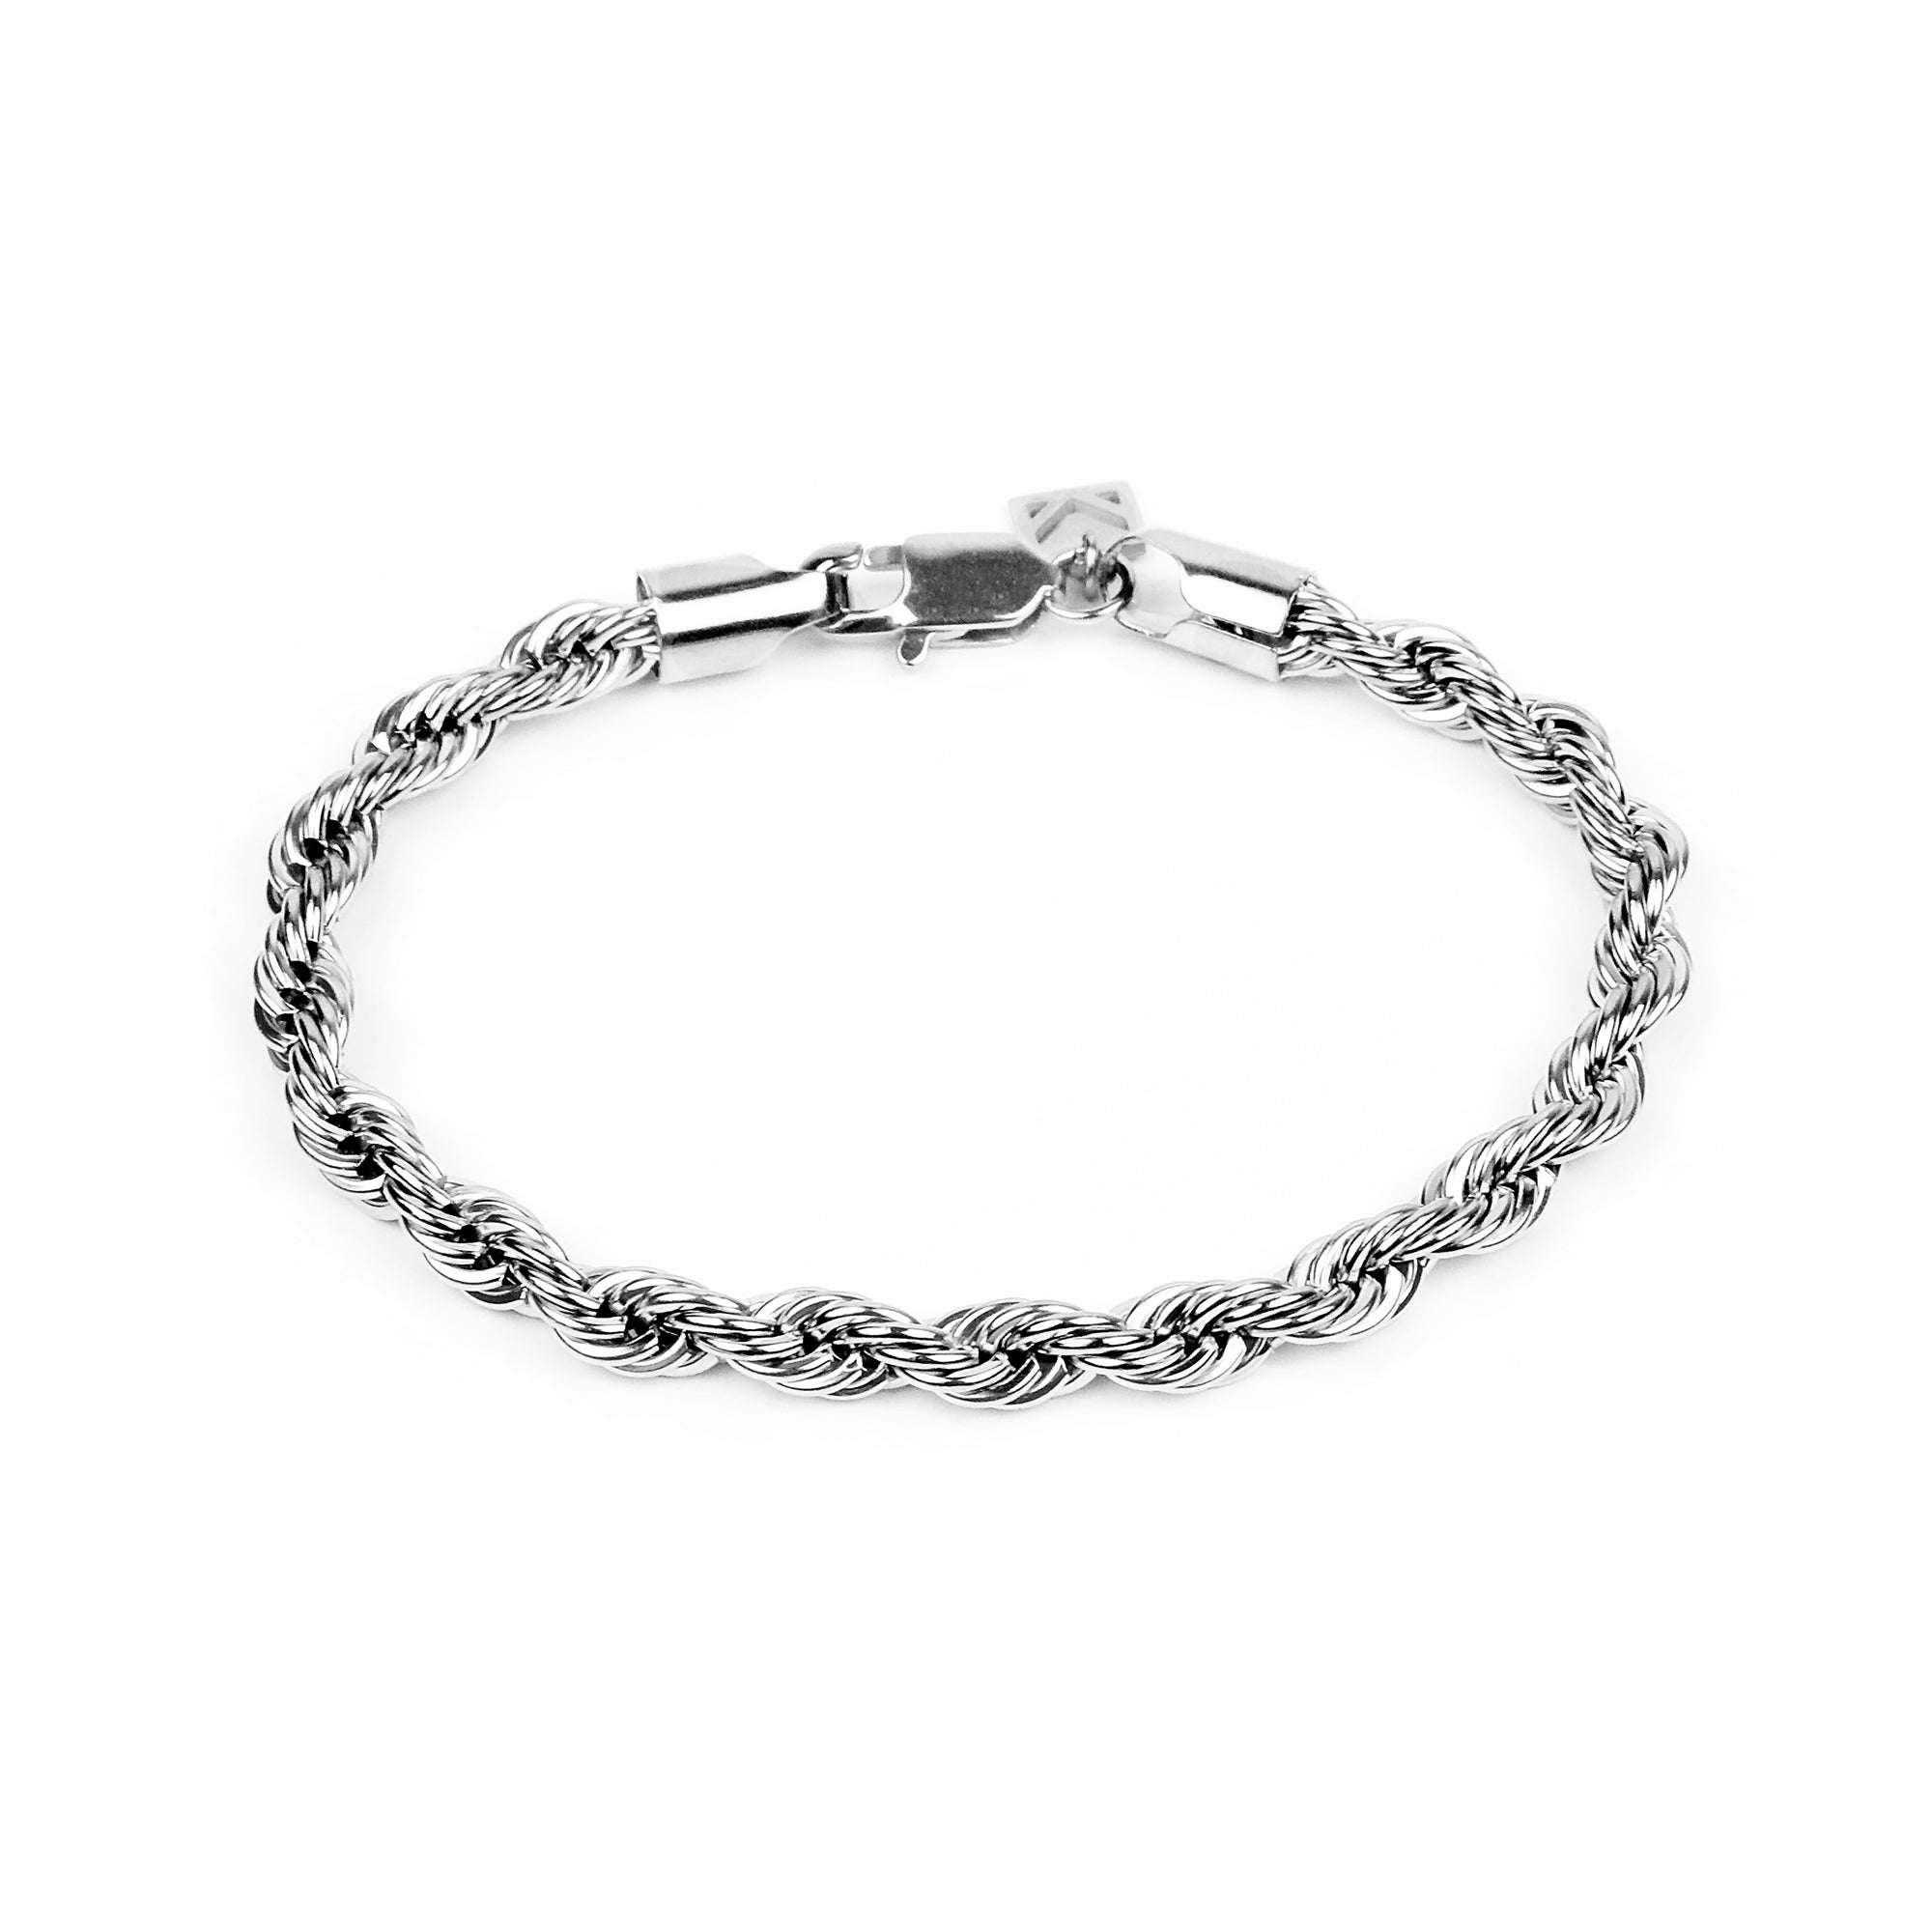 Rope Chain Bracelet - Silver 5mm